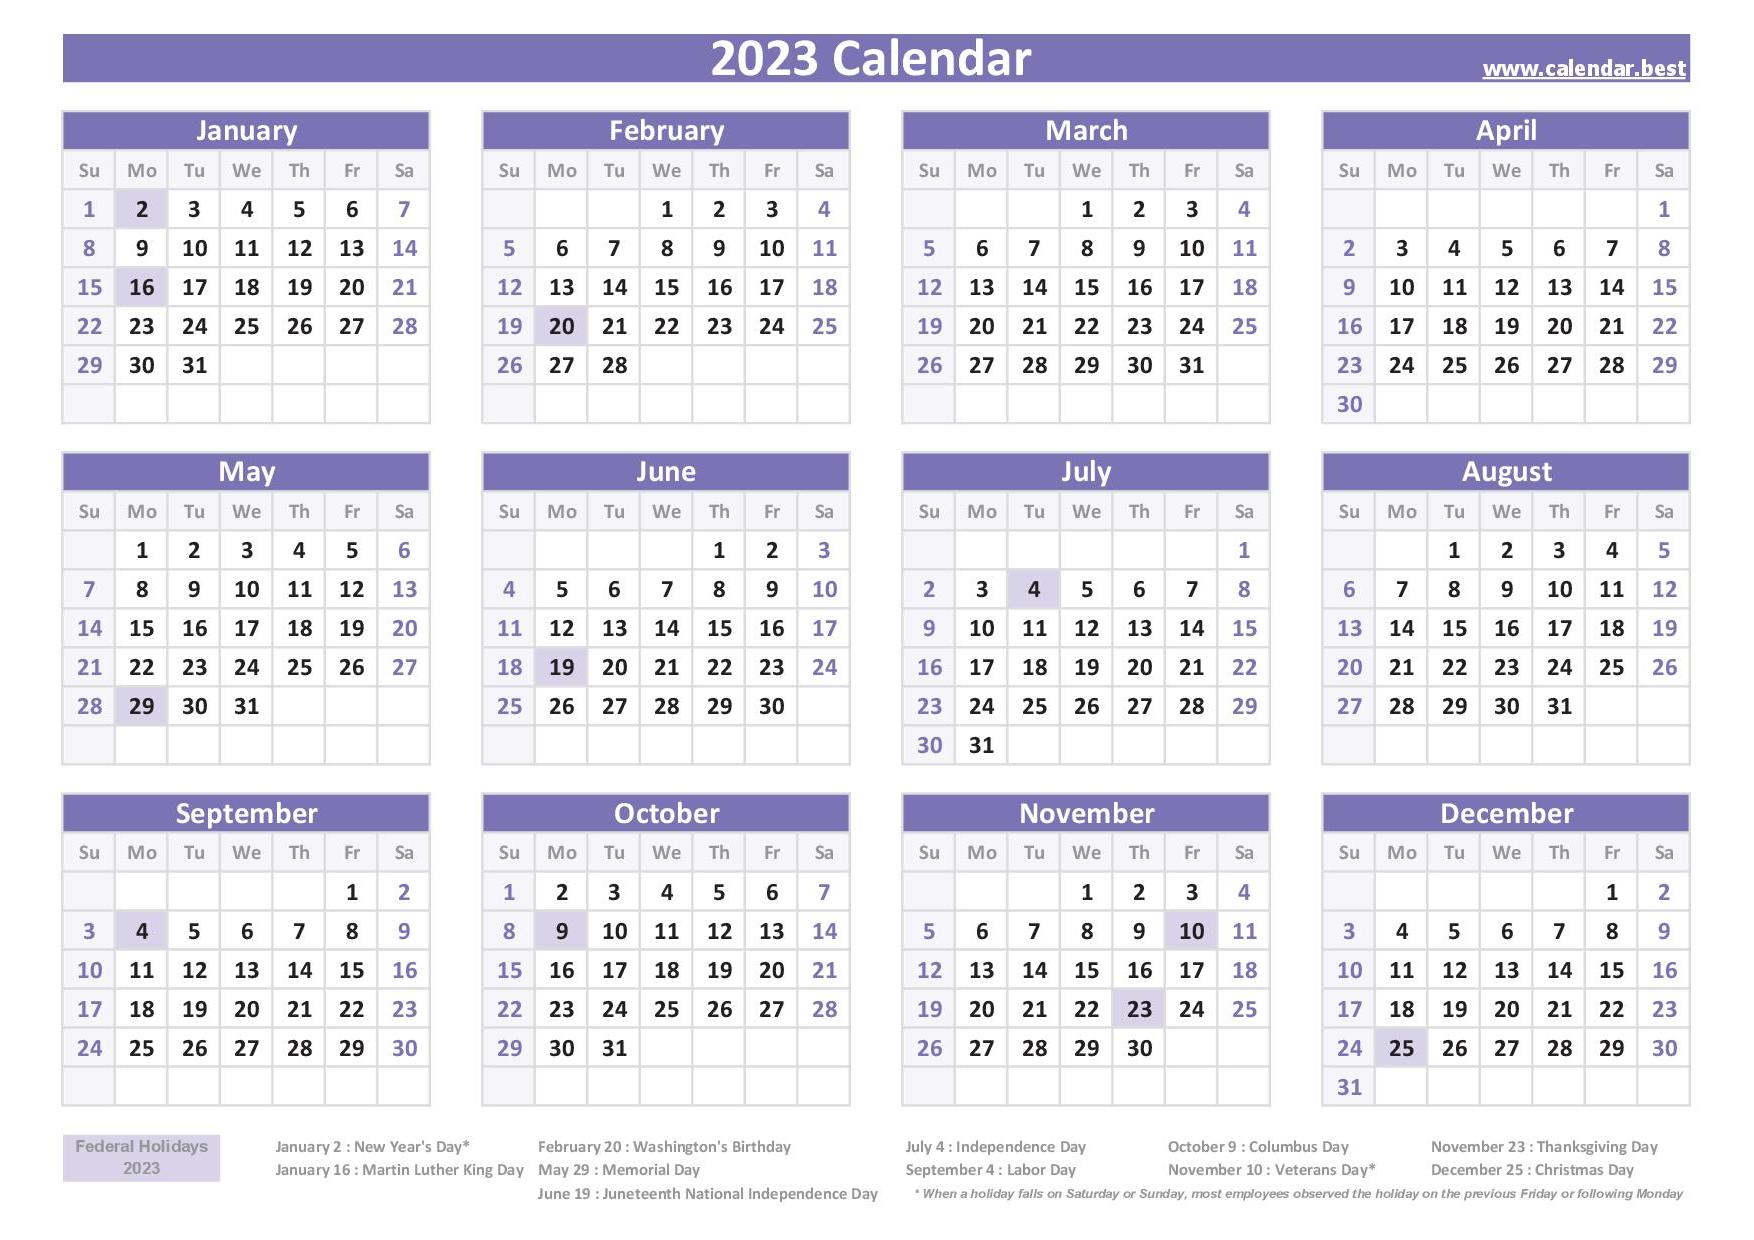 2023 Calendar With Holidays Us Federal Holidays